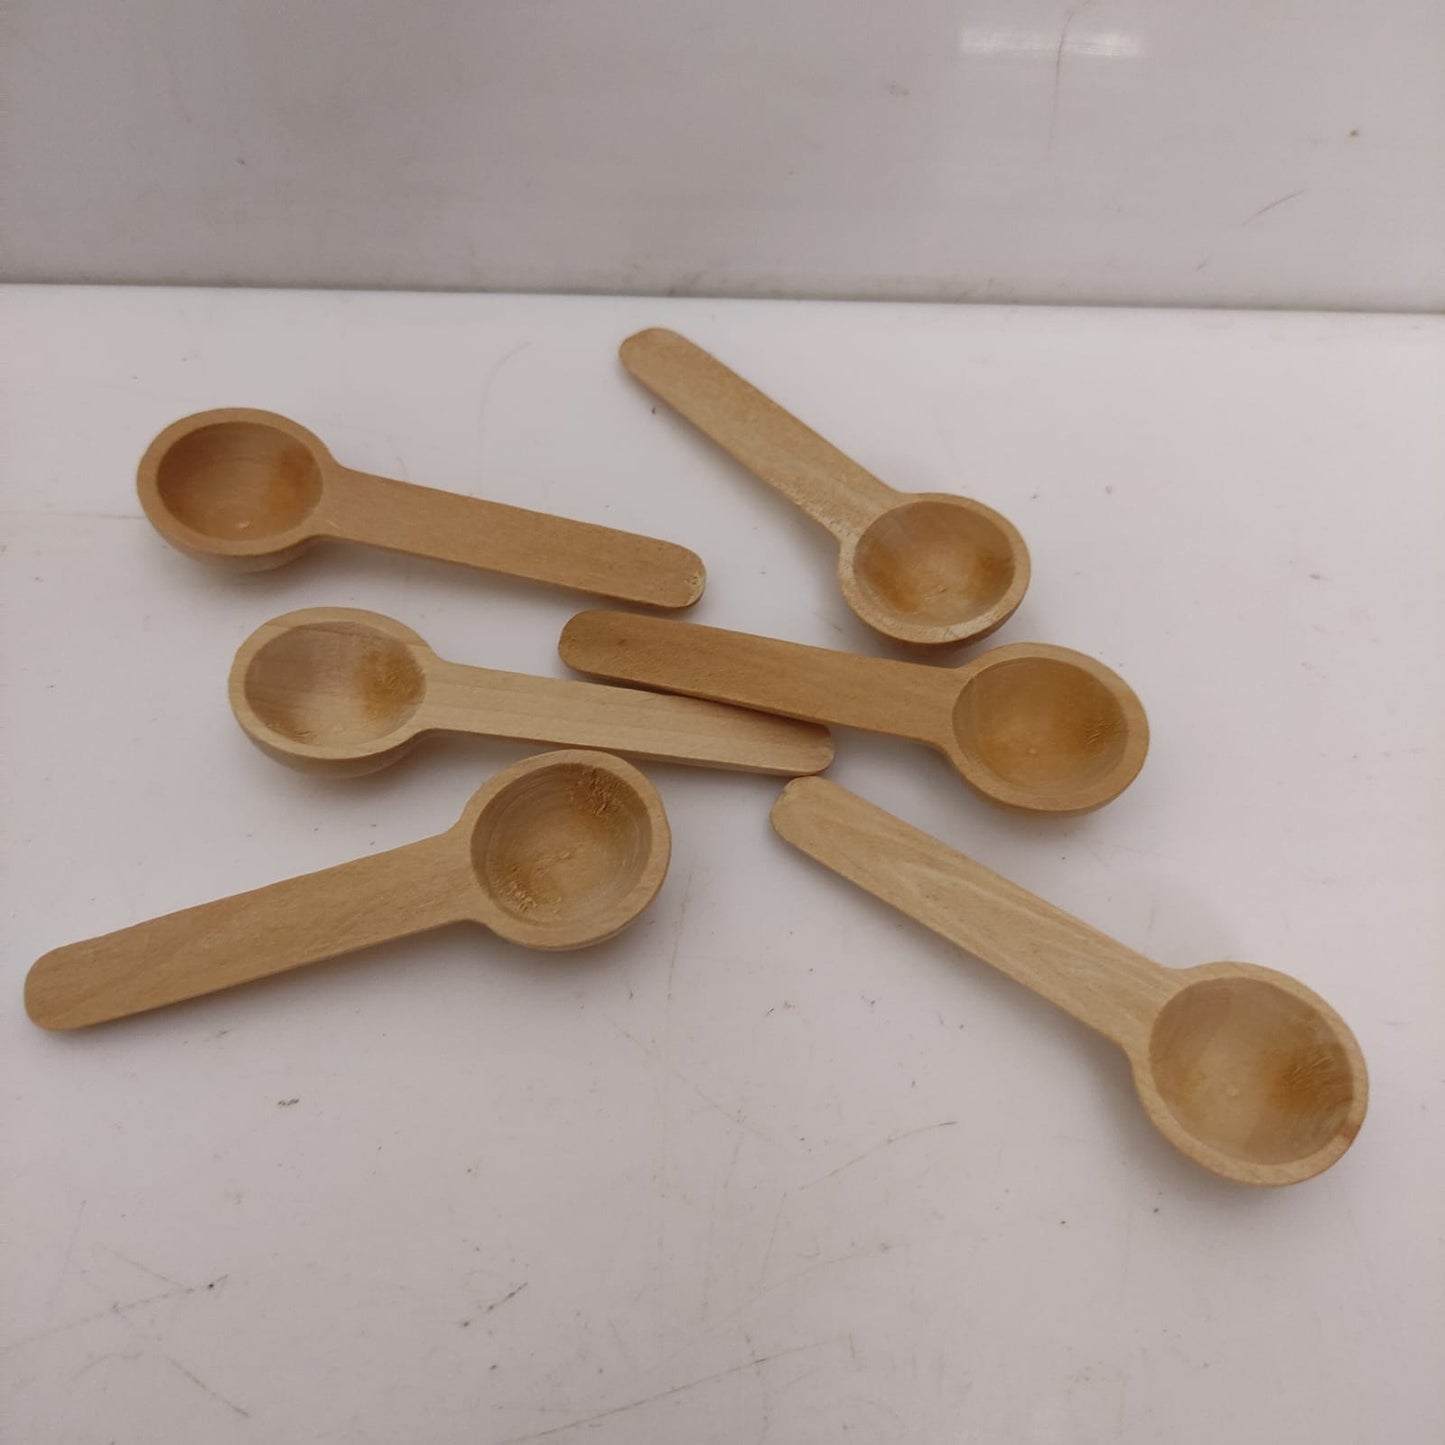 Bamboo Spoon Set of 6 pcs - WS0026